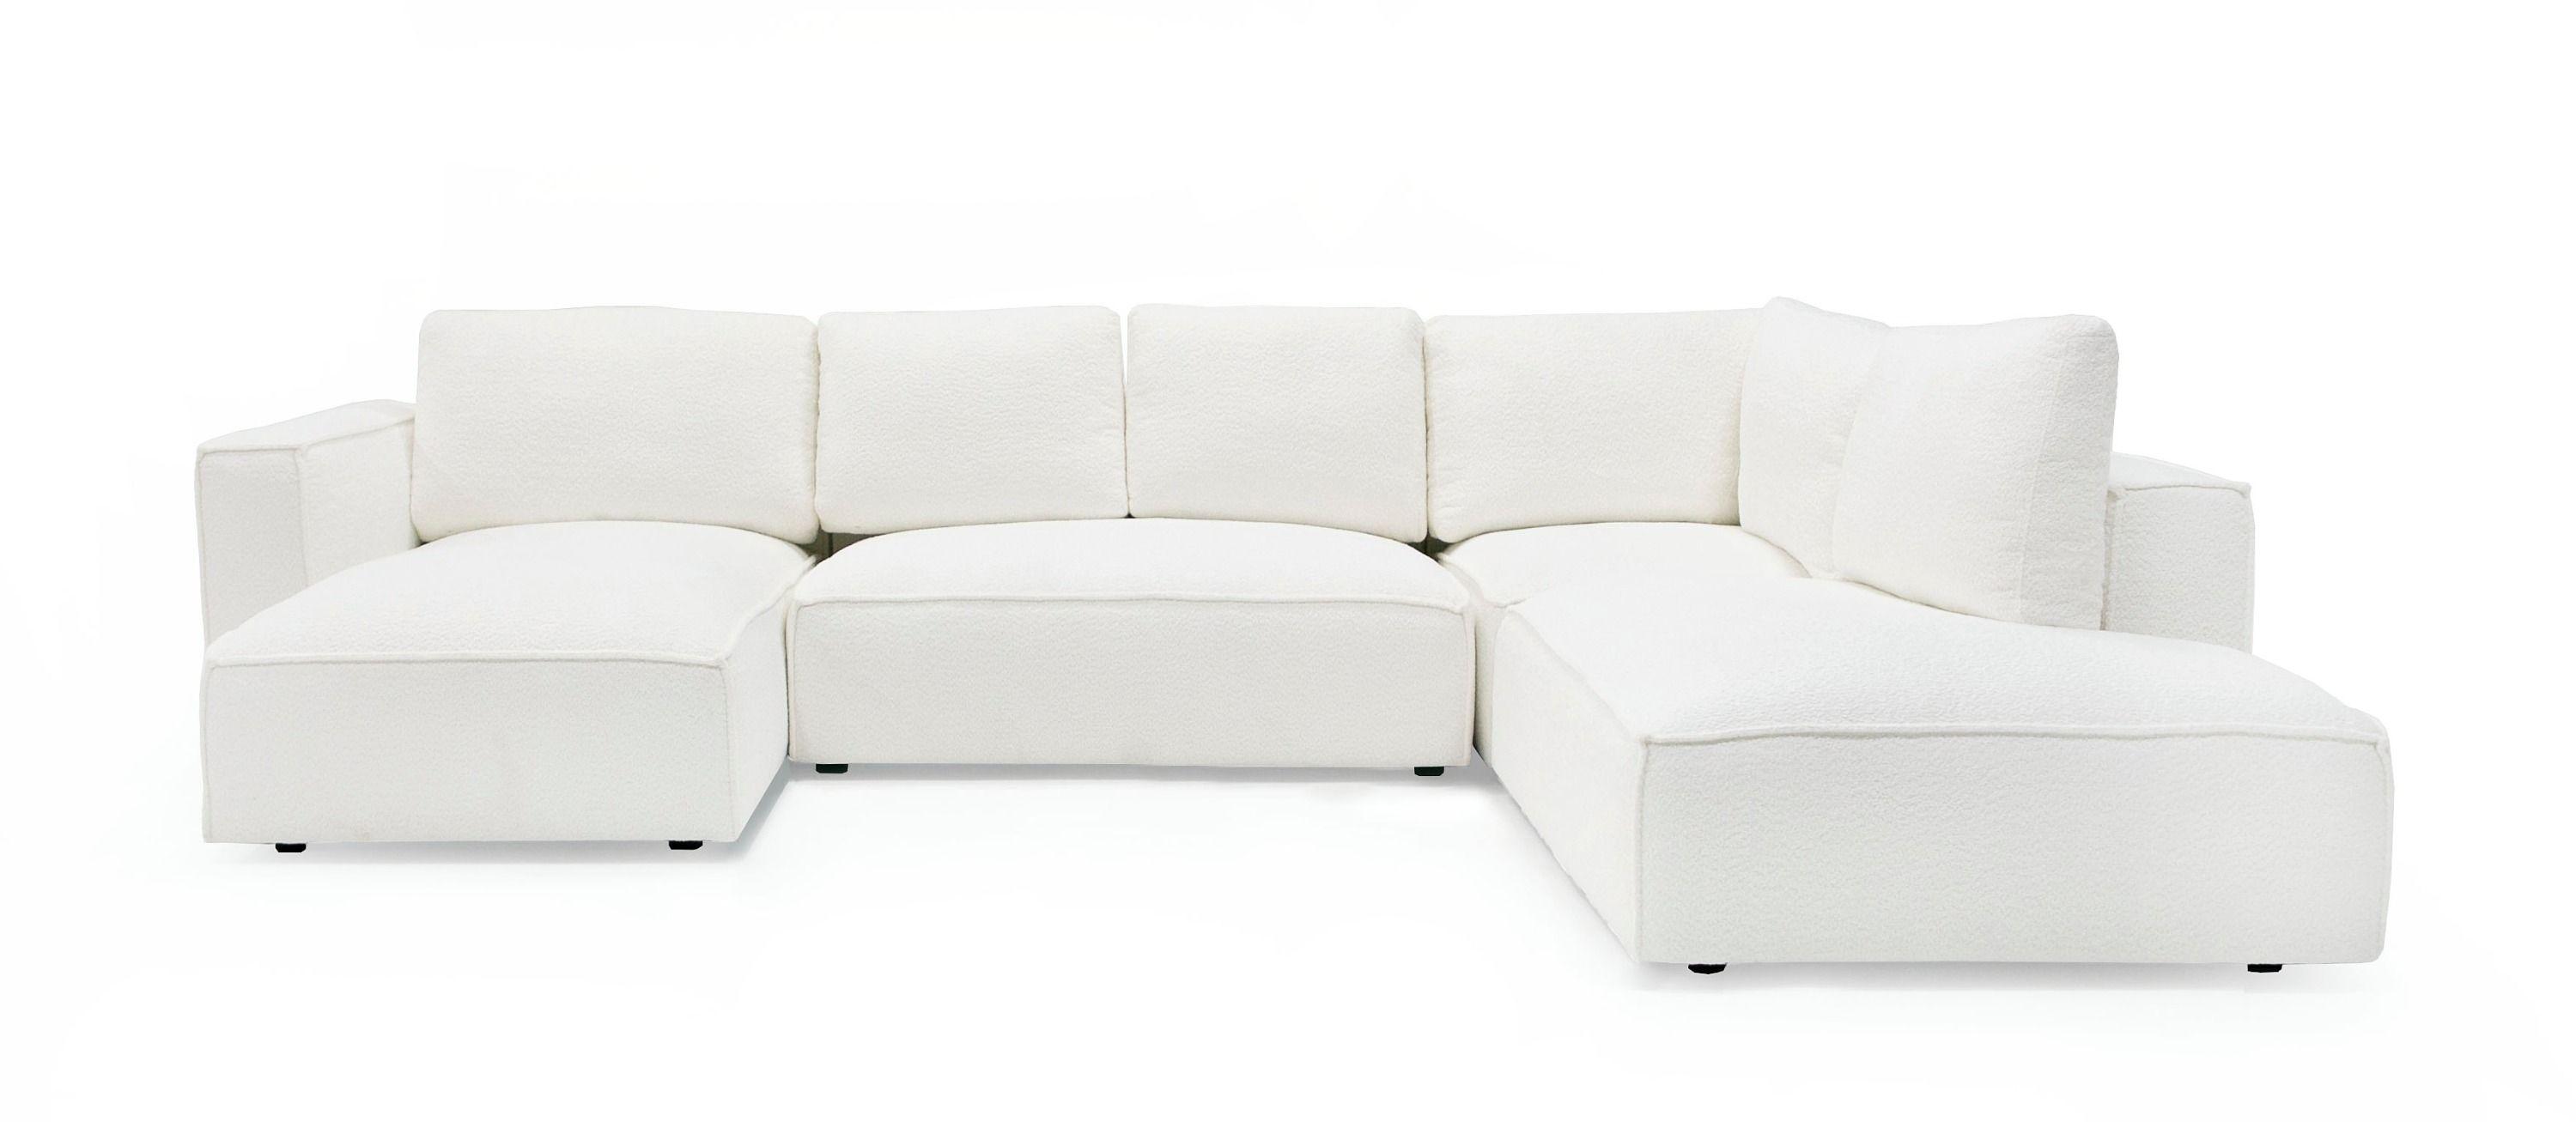 VIG Furniture Lulu Modular Sectional Sofa VGSX-F22053-LAF-WHT Modular Sectional Sofa